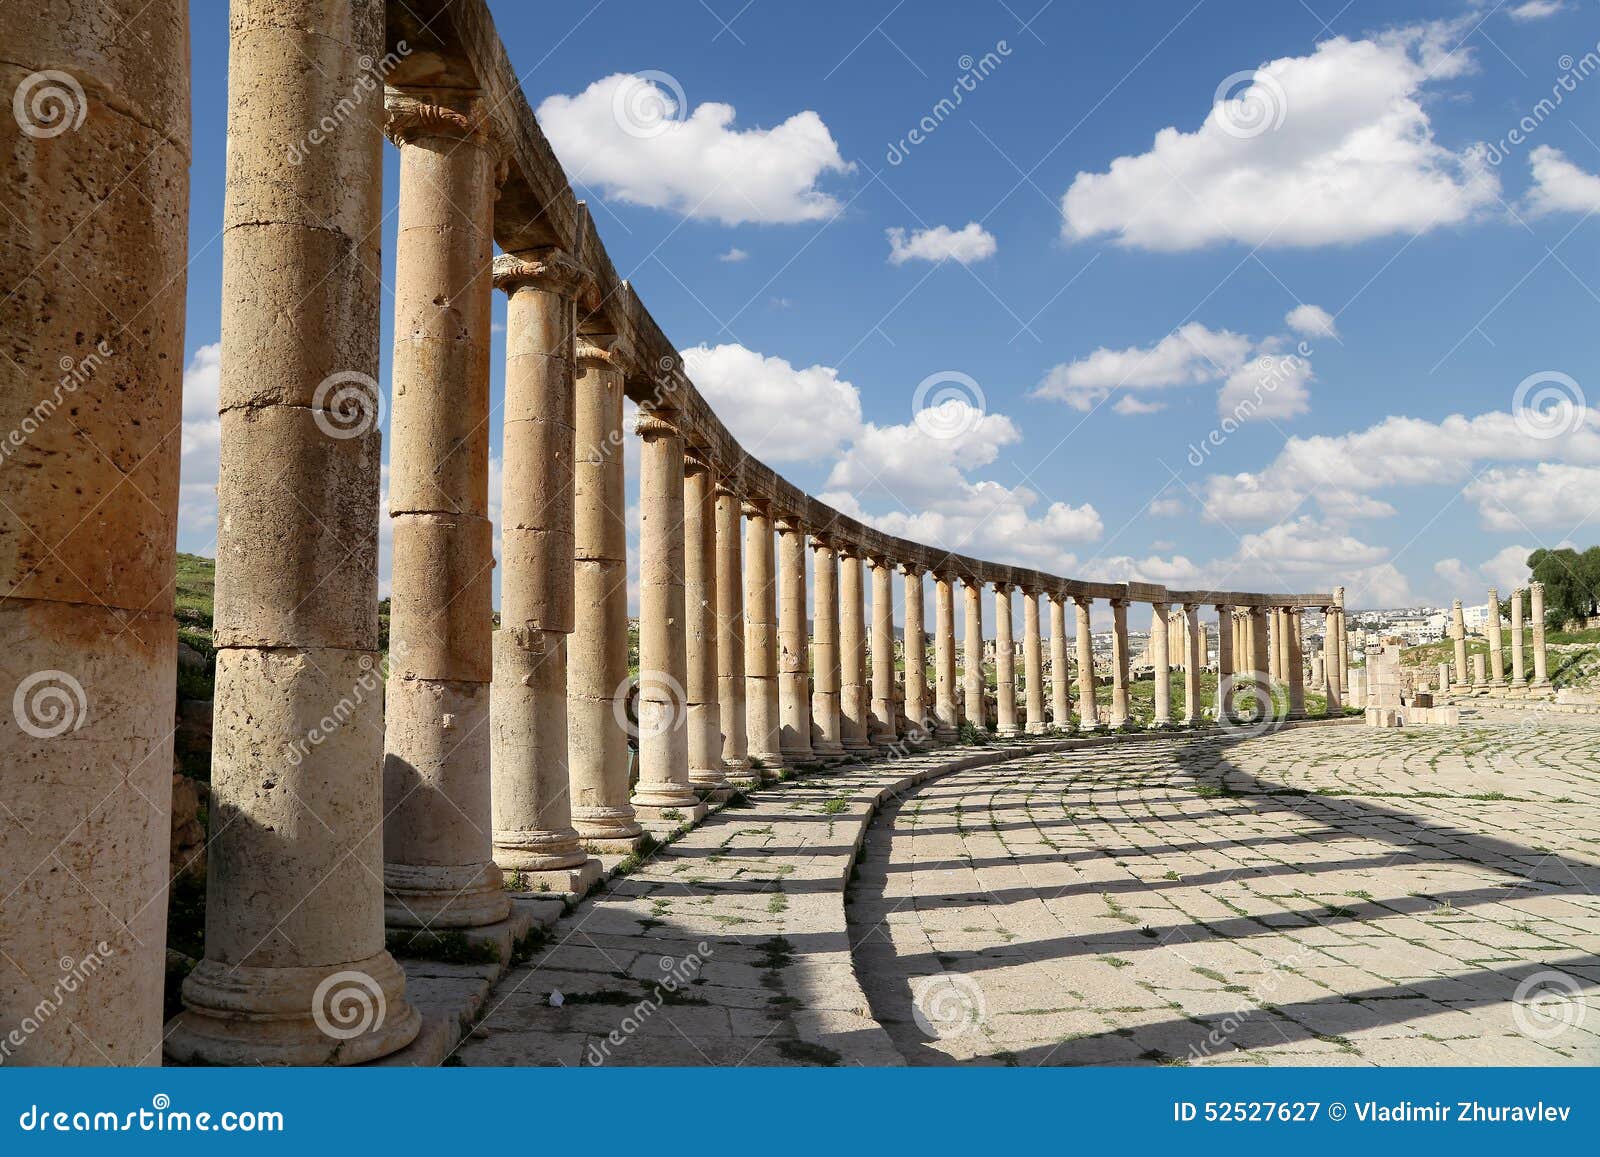 forum (oval plaza) in gerasa (jerash), jordan